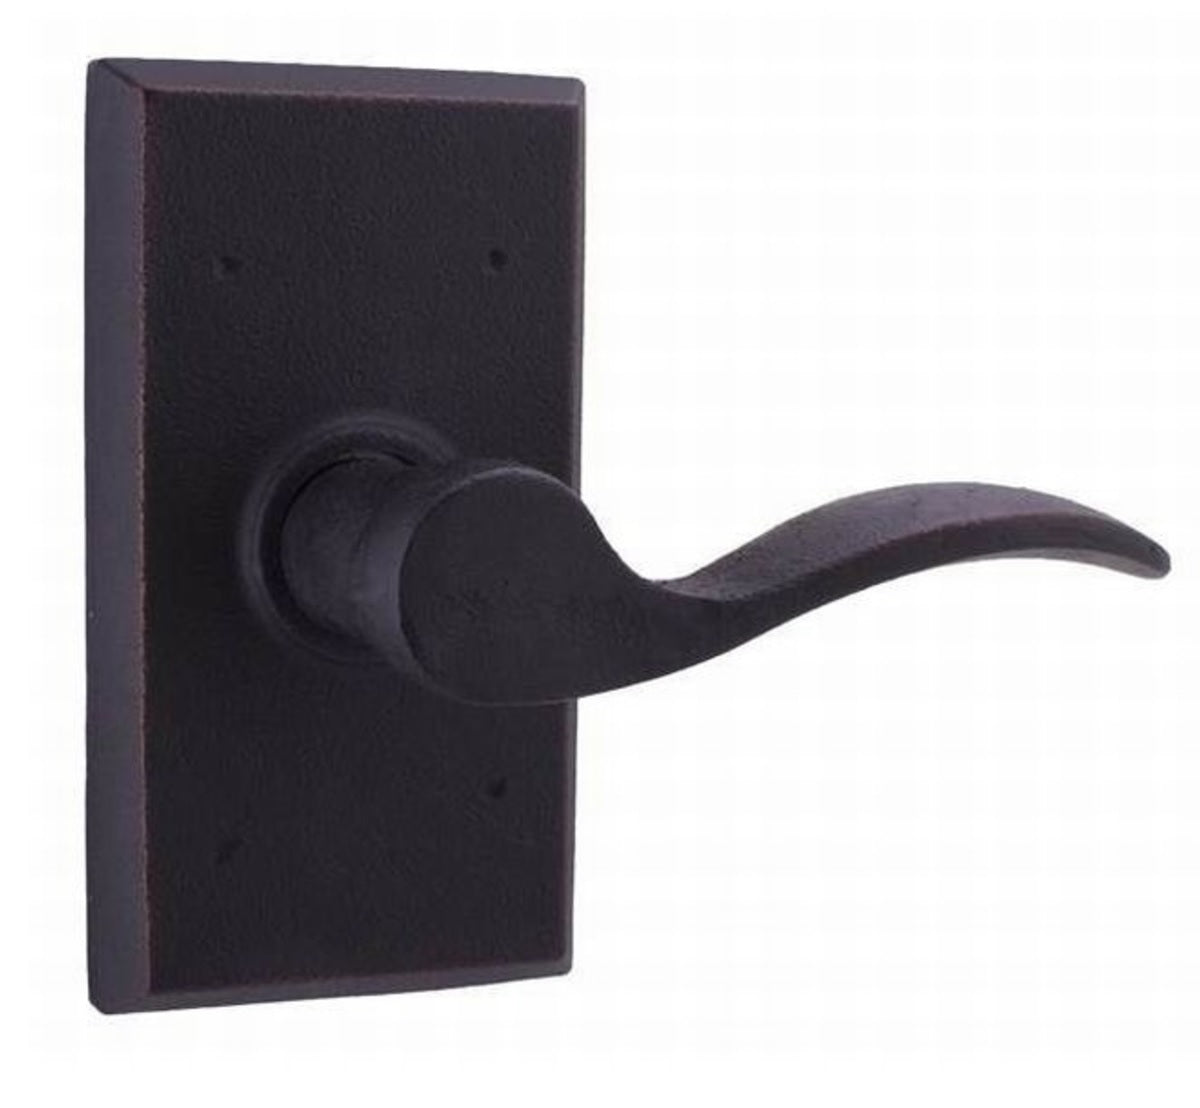 buy passage locksets at cheap rate in bulk. wholesale & retail construction hardware supplies store. home décor ideas, maintenance, repair replacement parts